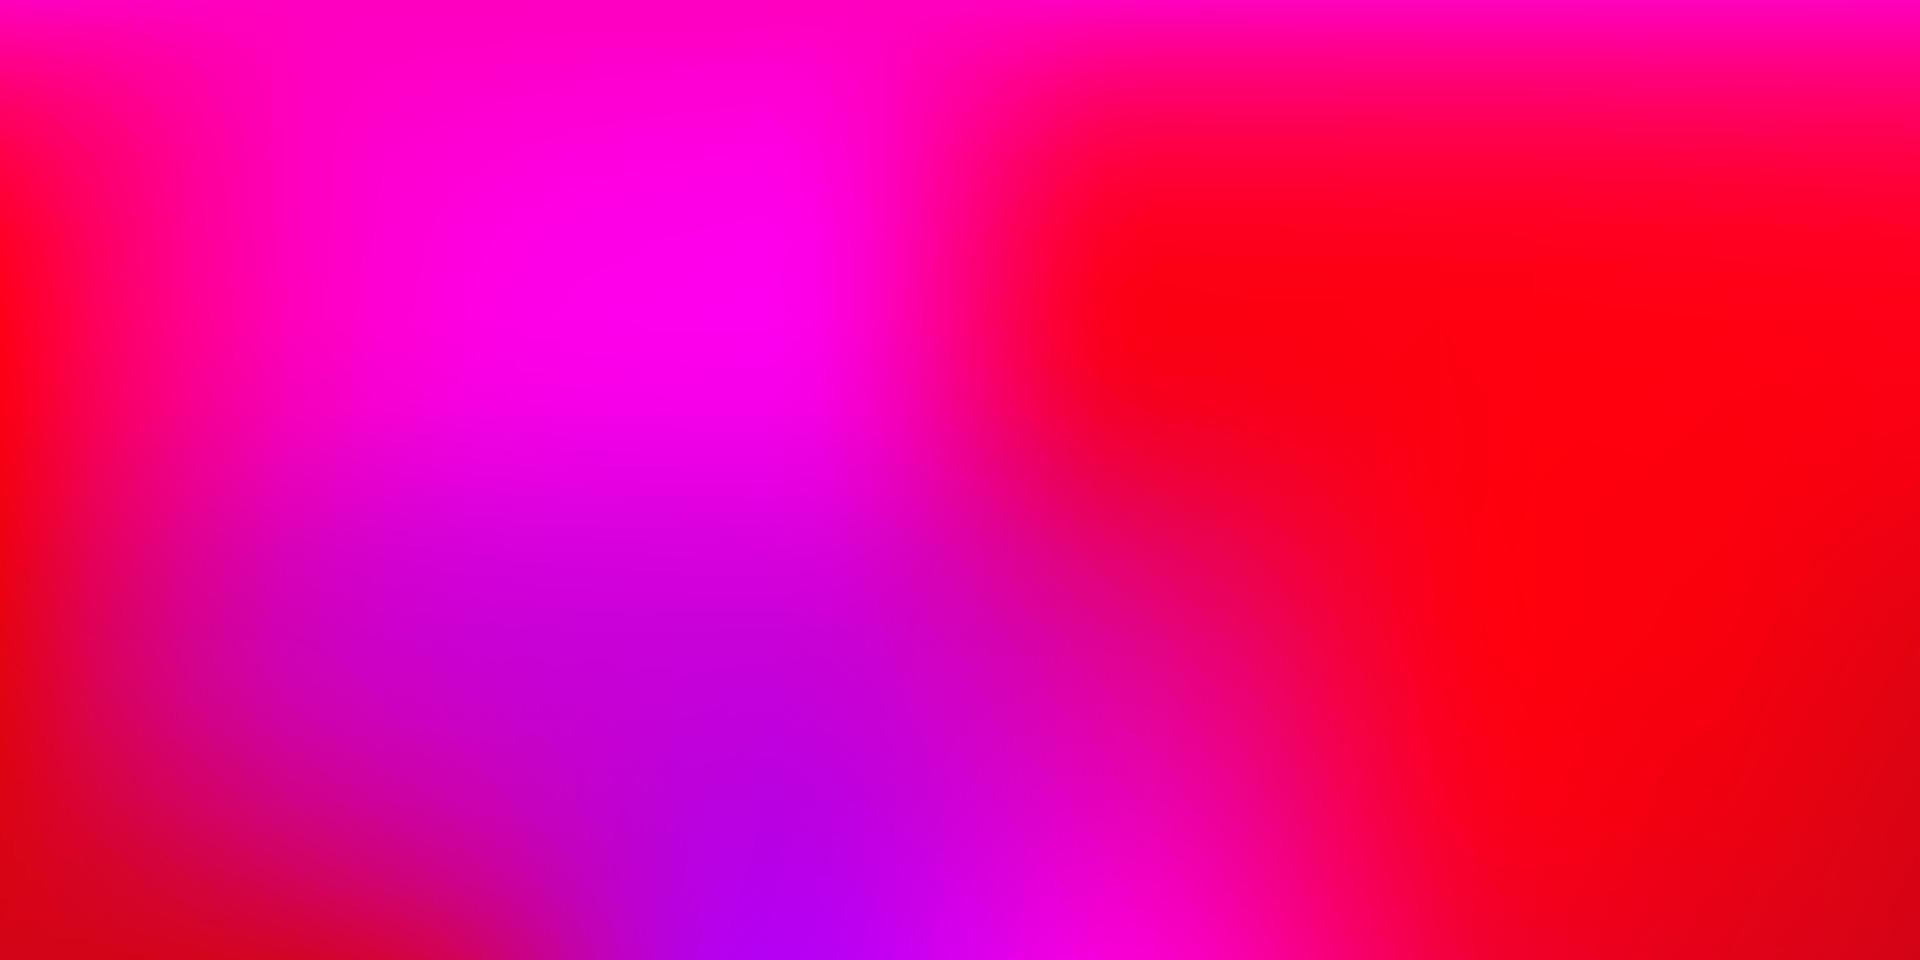 Dark Pink, Red vector blurred backdrop.